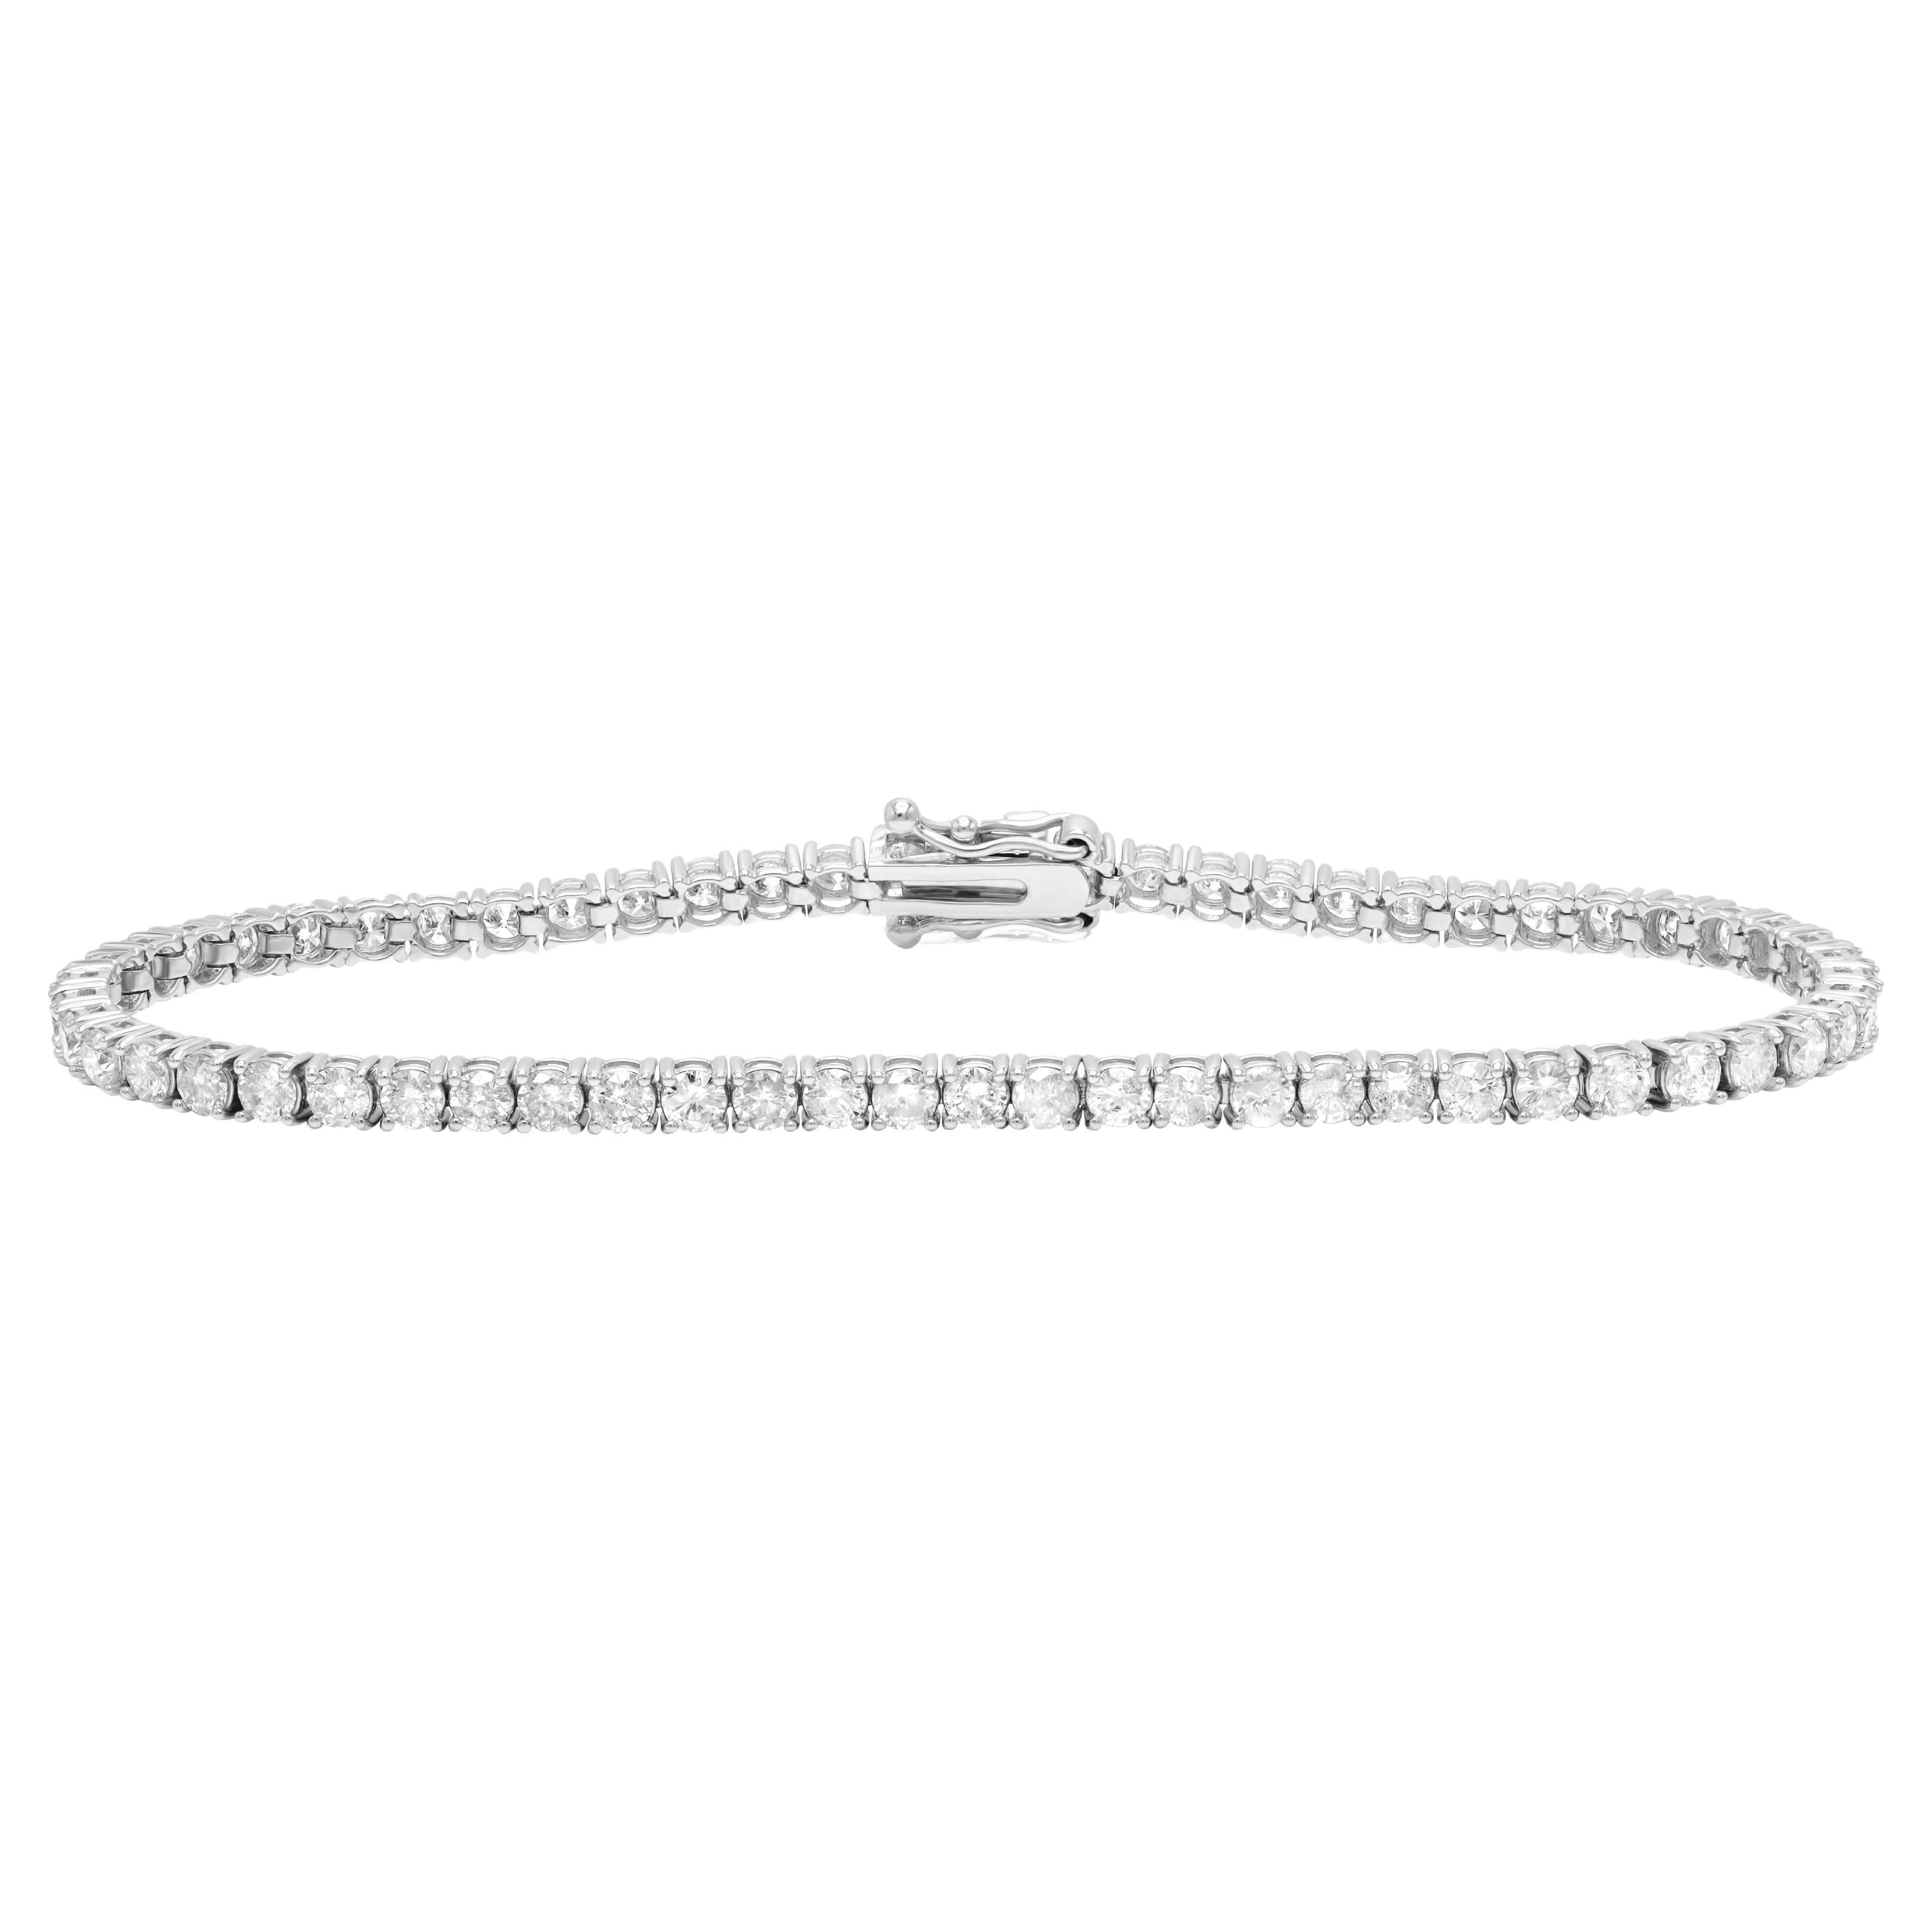 Diana M. Custom 4.50 Cts Diamond Tennis Bracelet in  14kt White Gold